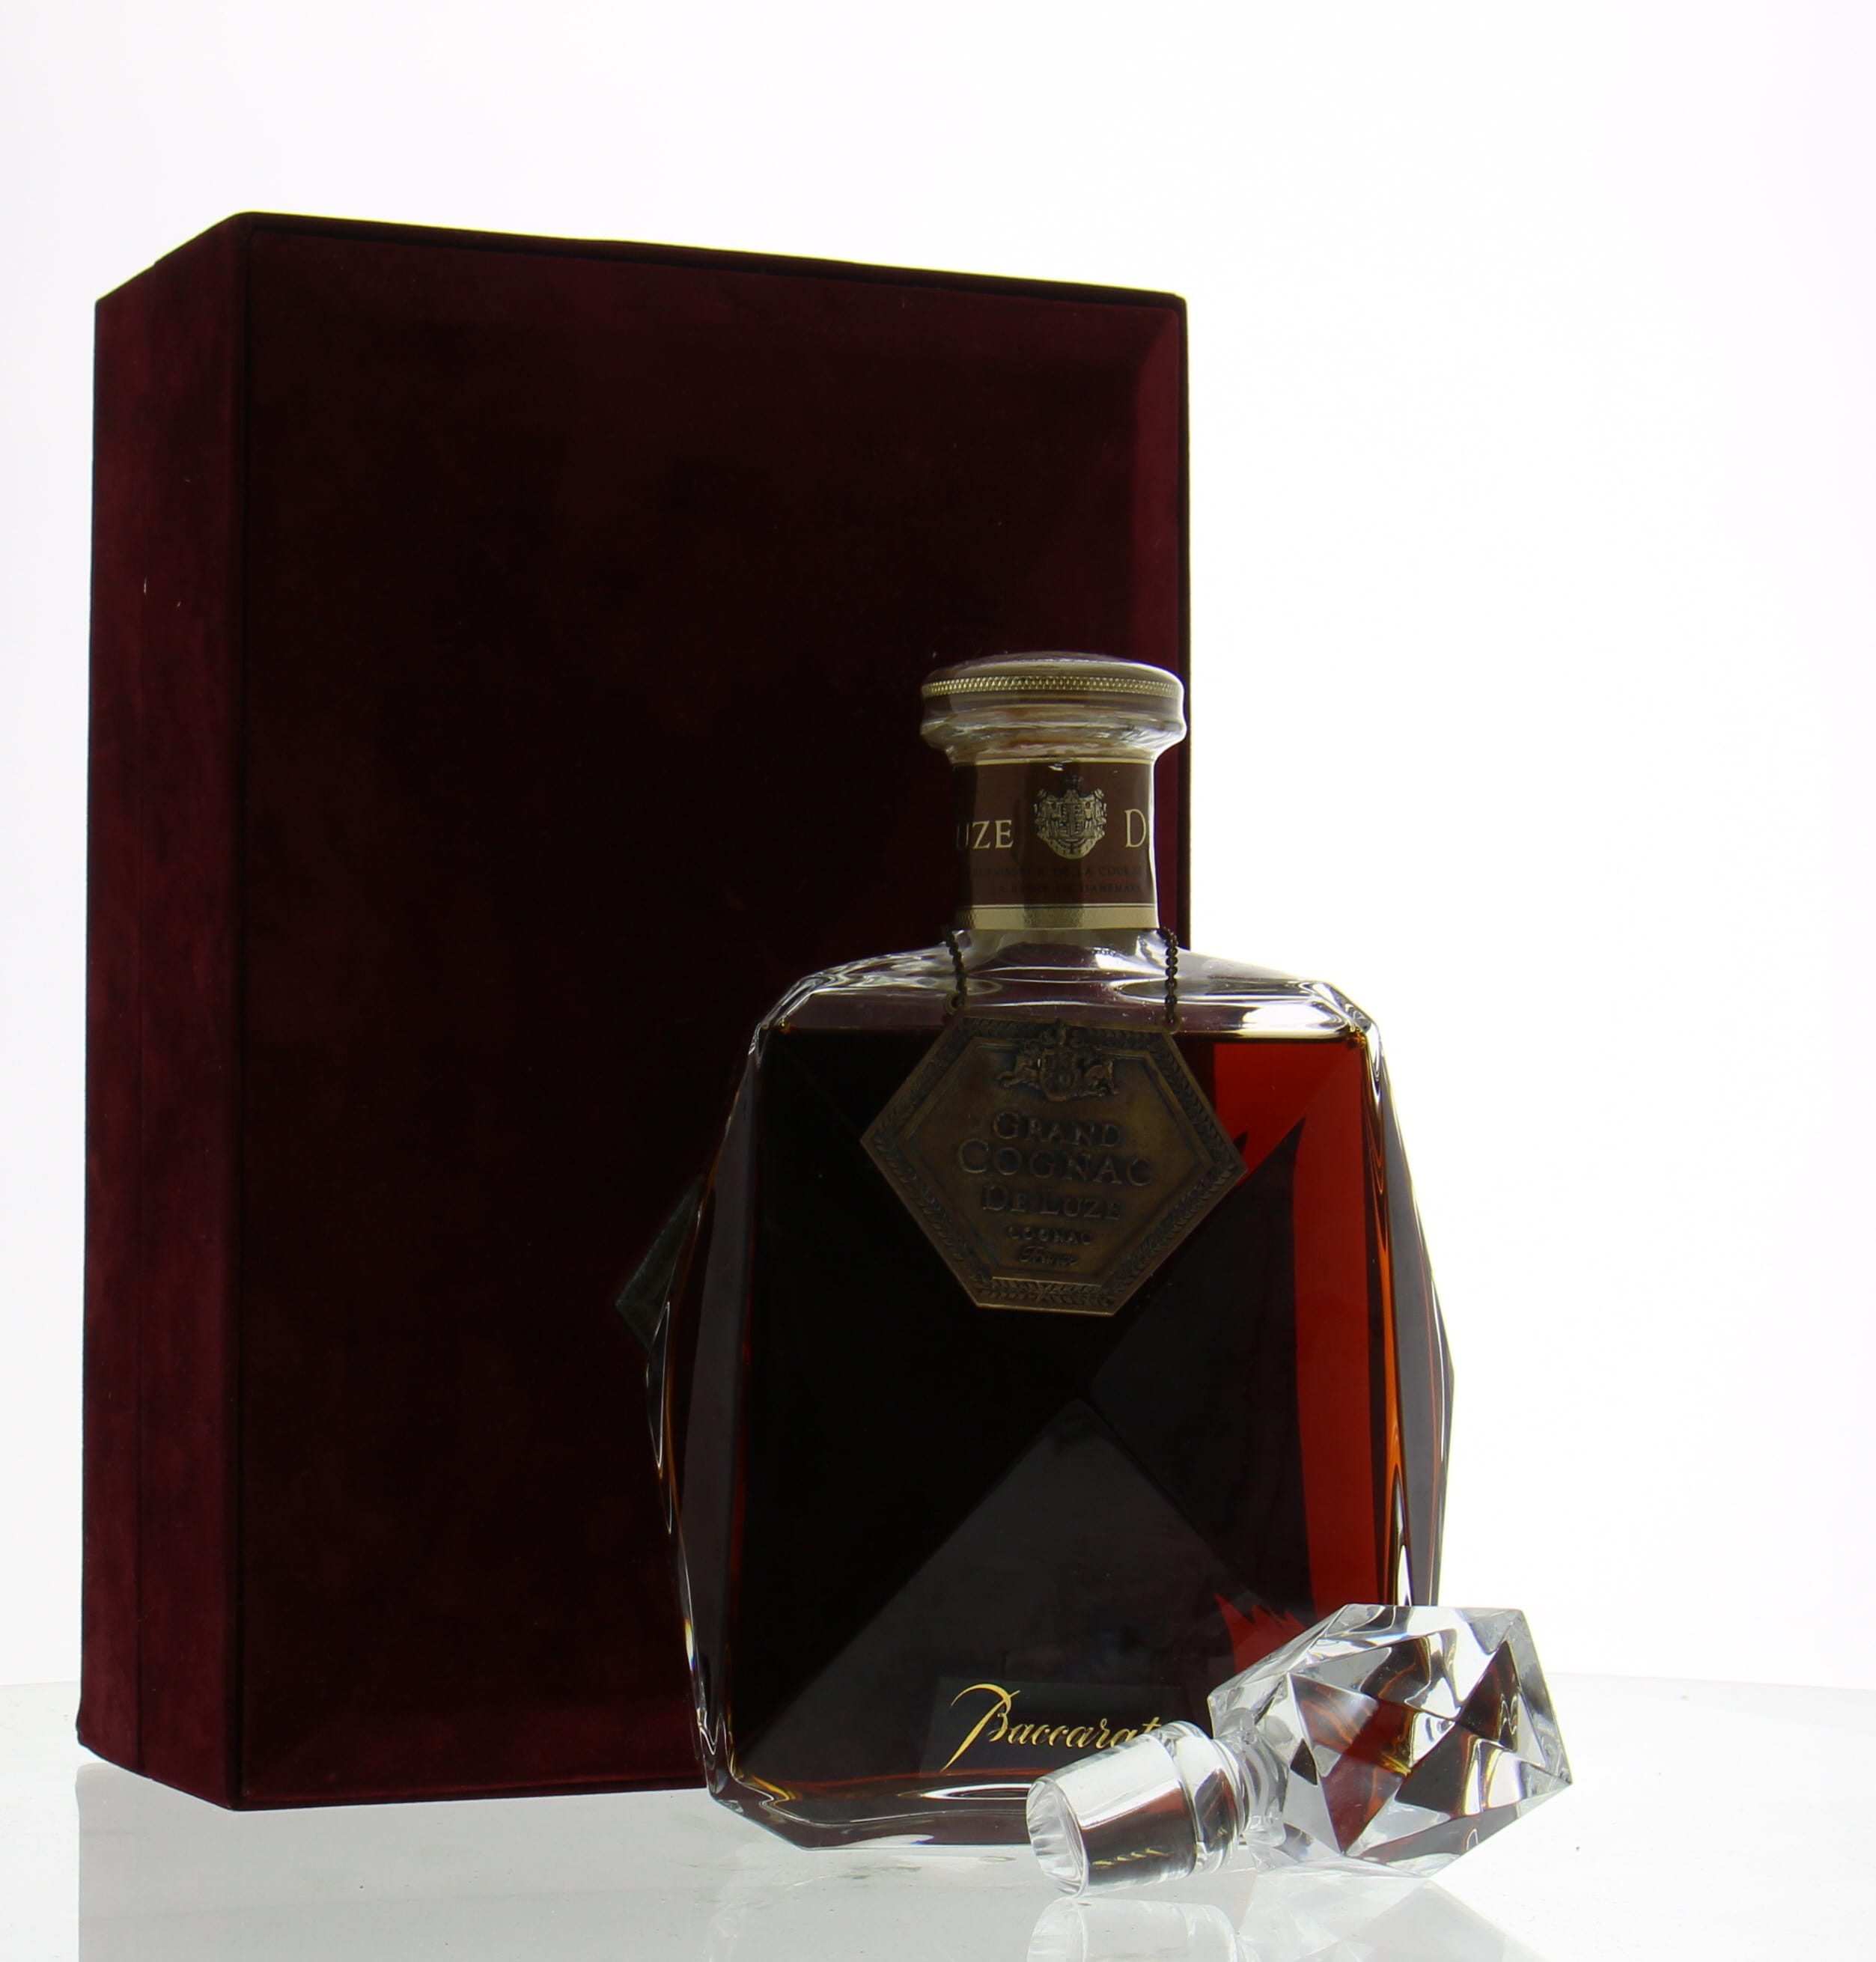 De Luze - Baccarat Grand Cognac no A 995 NV